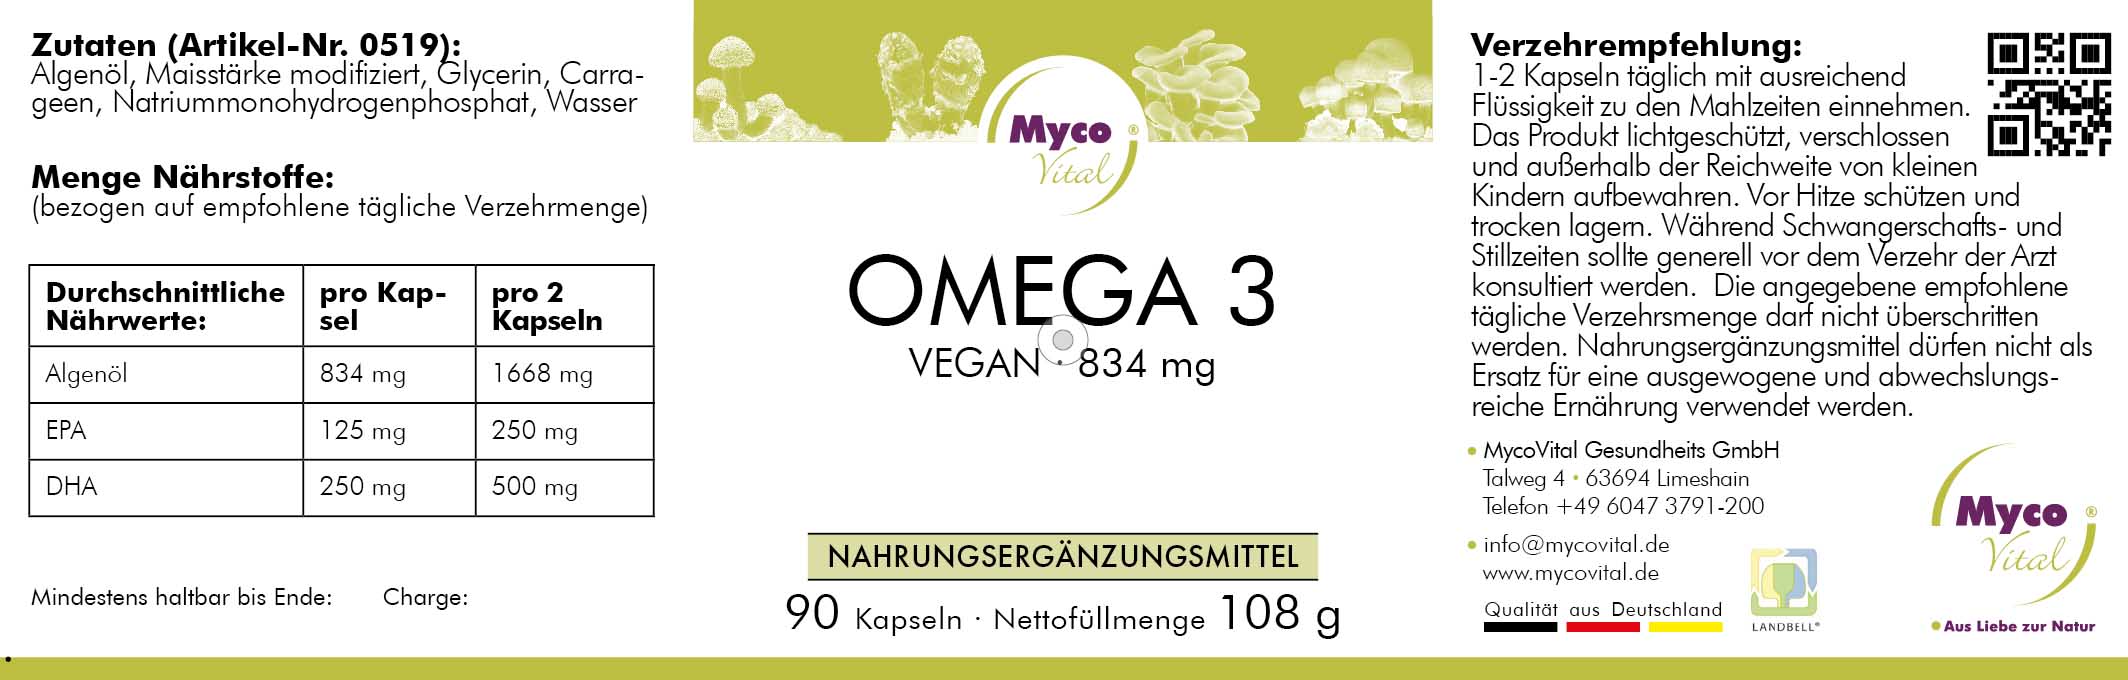 MycoVital Omega 3 VEG Alghe 834 mg